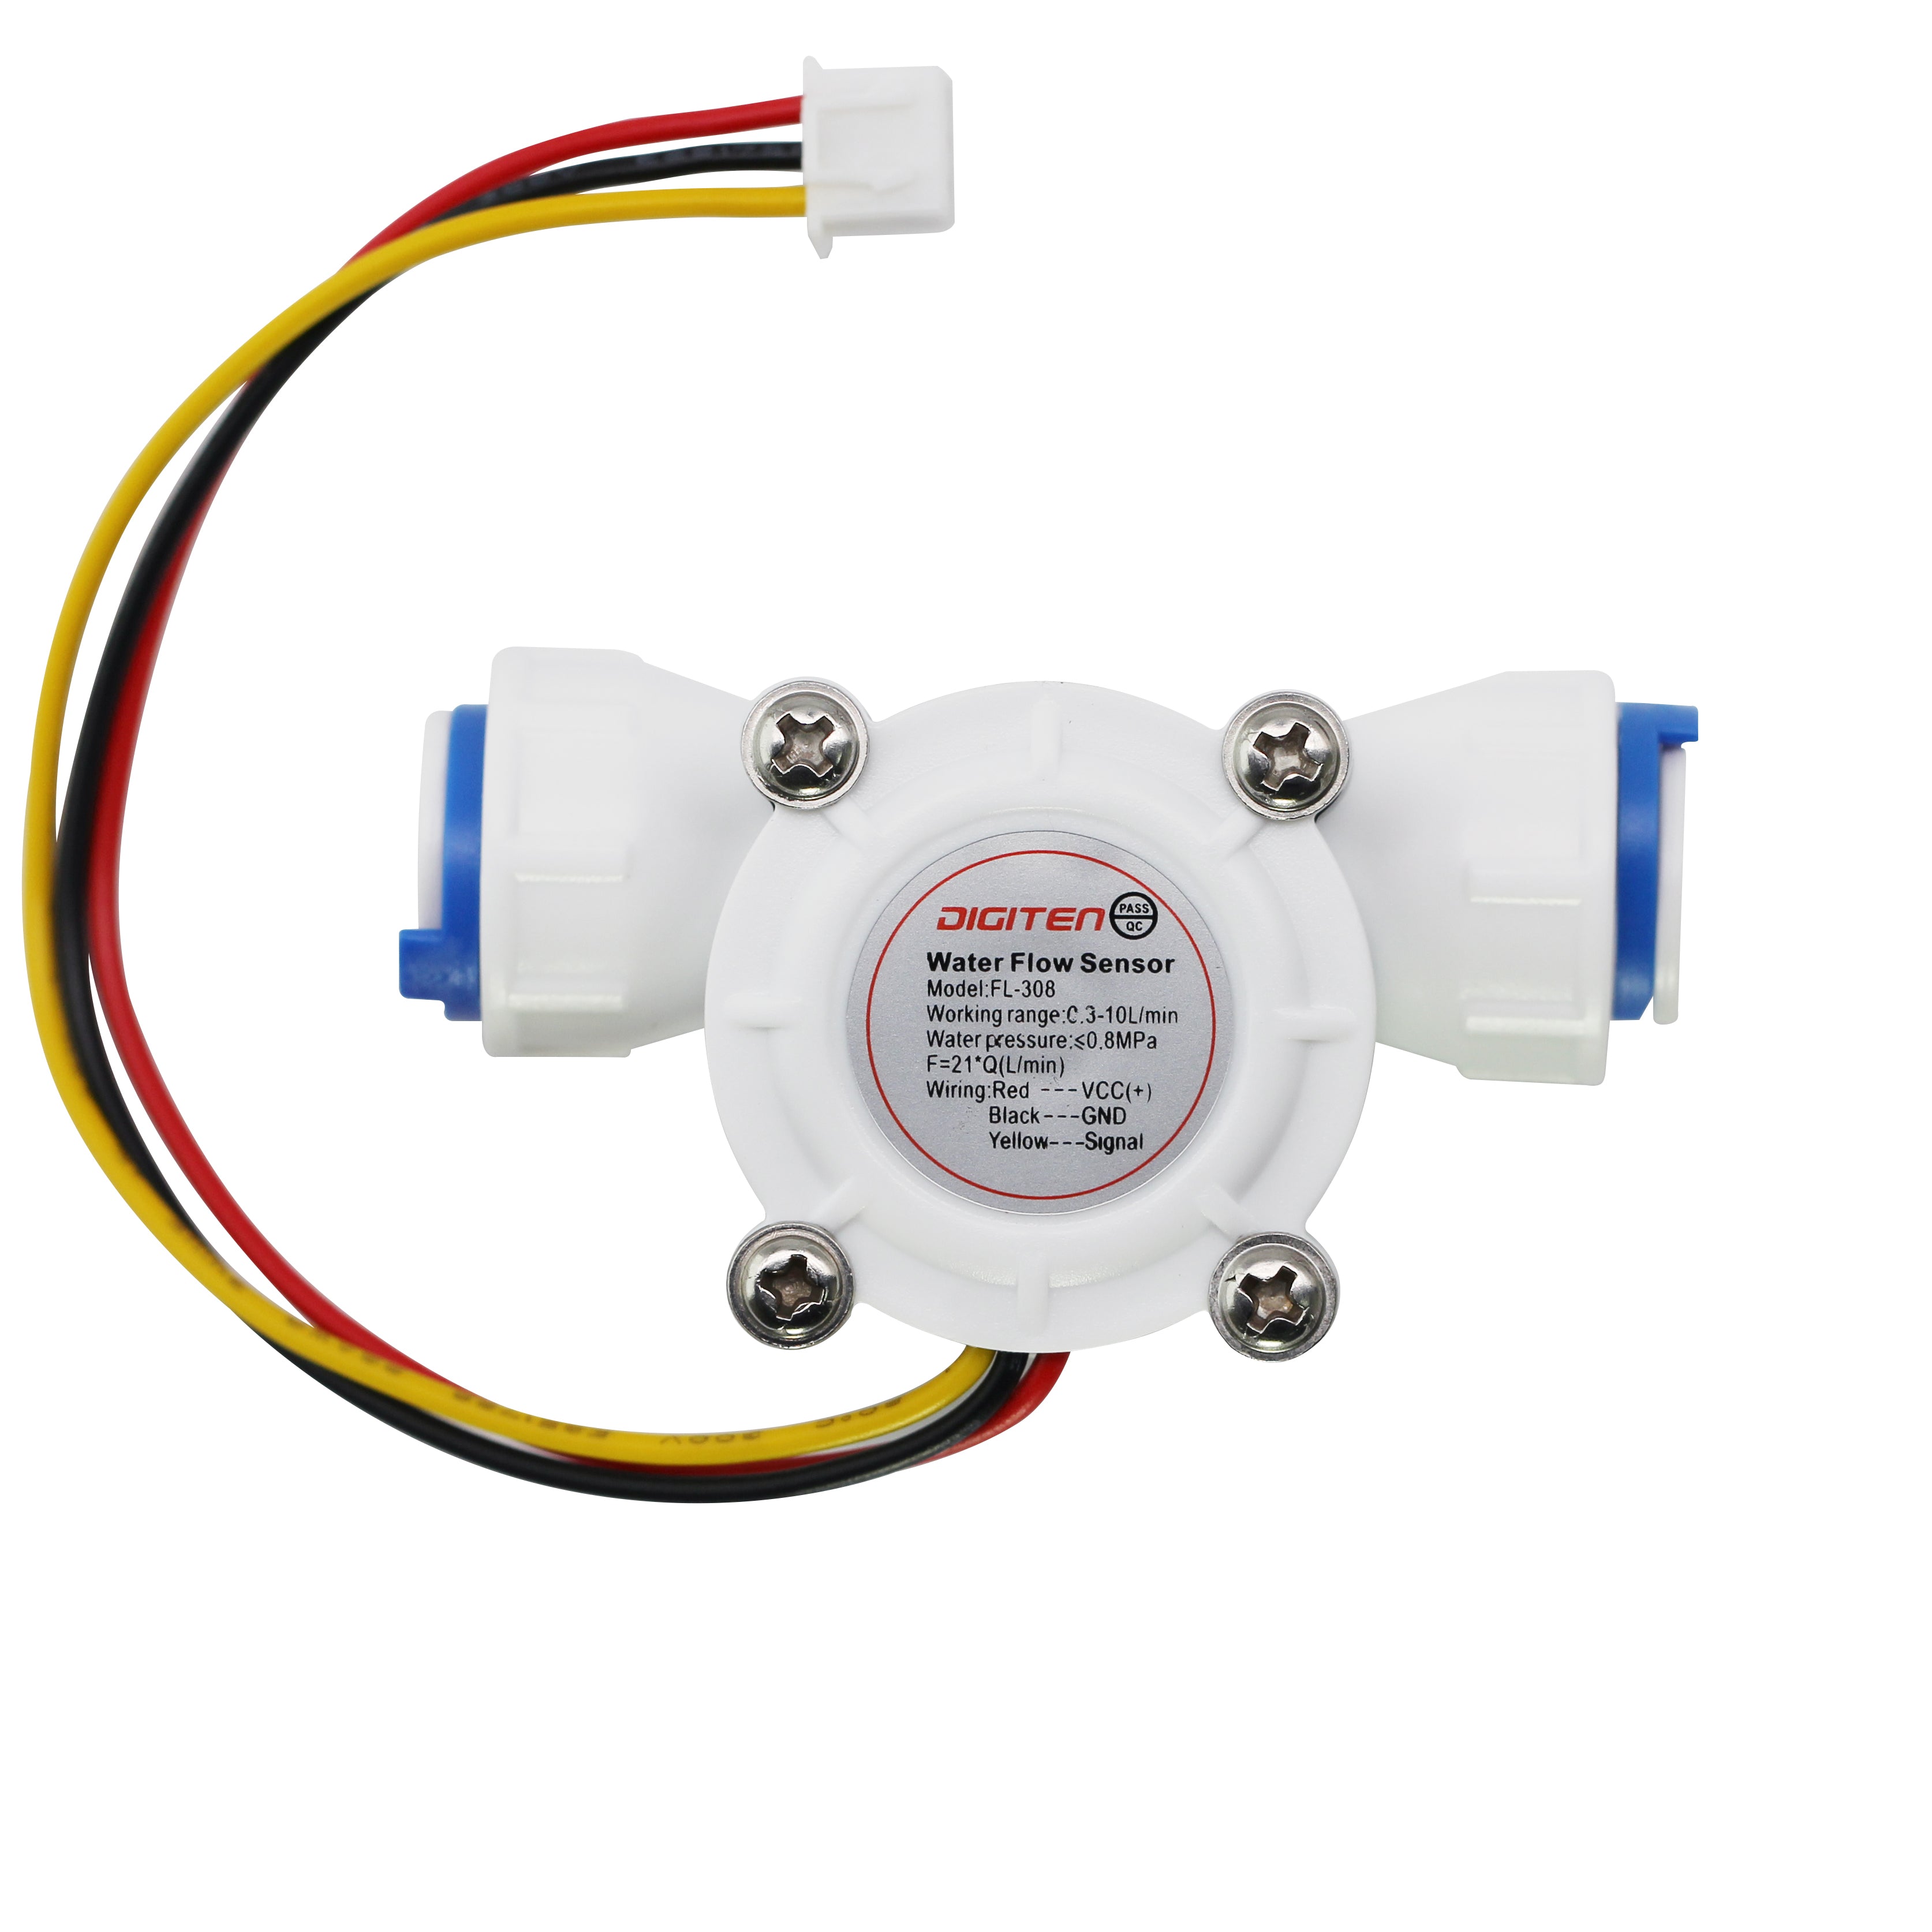 DIGITEN WTC100 Wireless Thermostat Plug-in Temperature Controller Outl